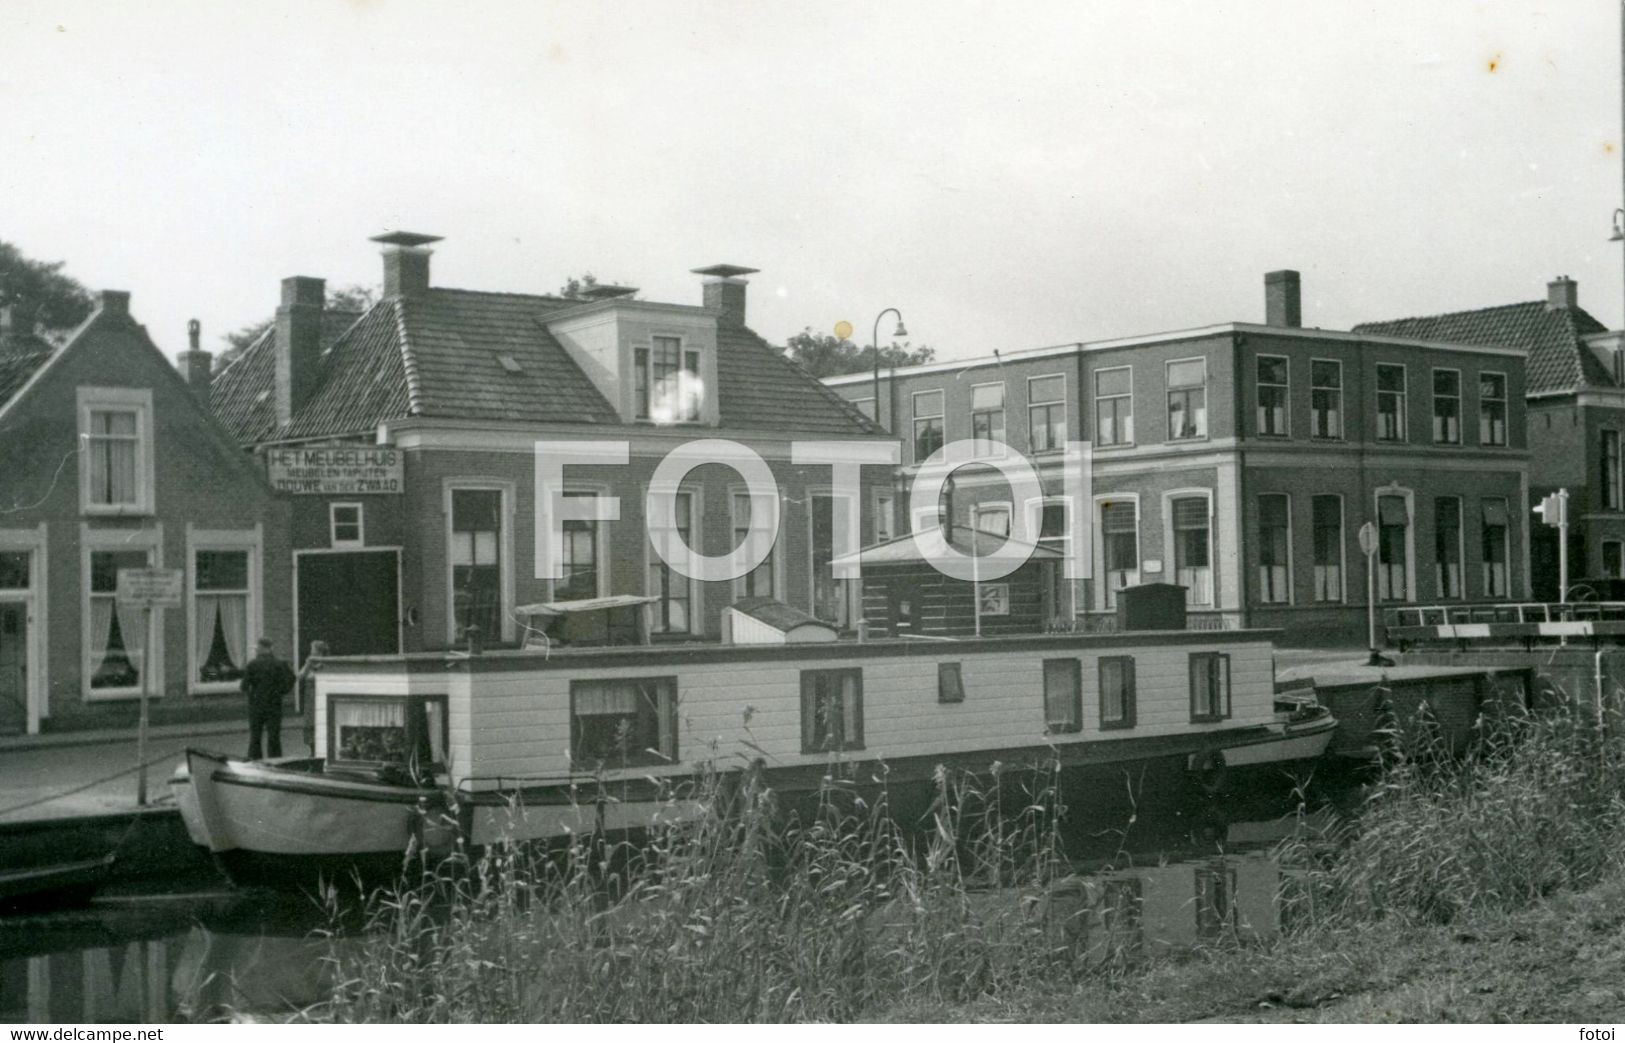 REAL PHOTO POSTCARD DUTCH HOUSE BOAT NETHERLANDS HOLLAND NETHERLAND CARTE POSTALE - Heerenveen